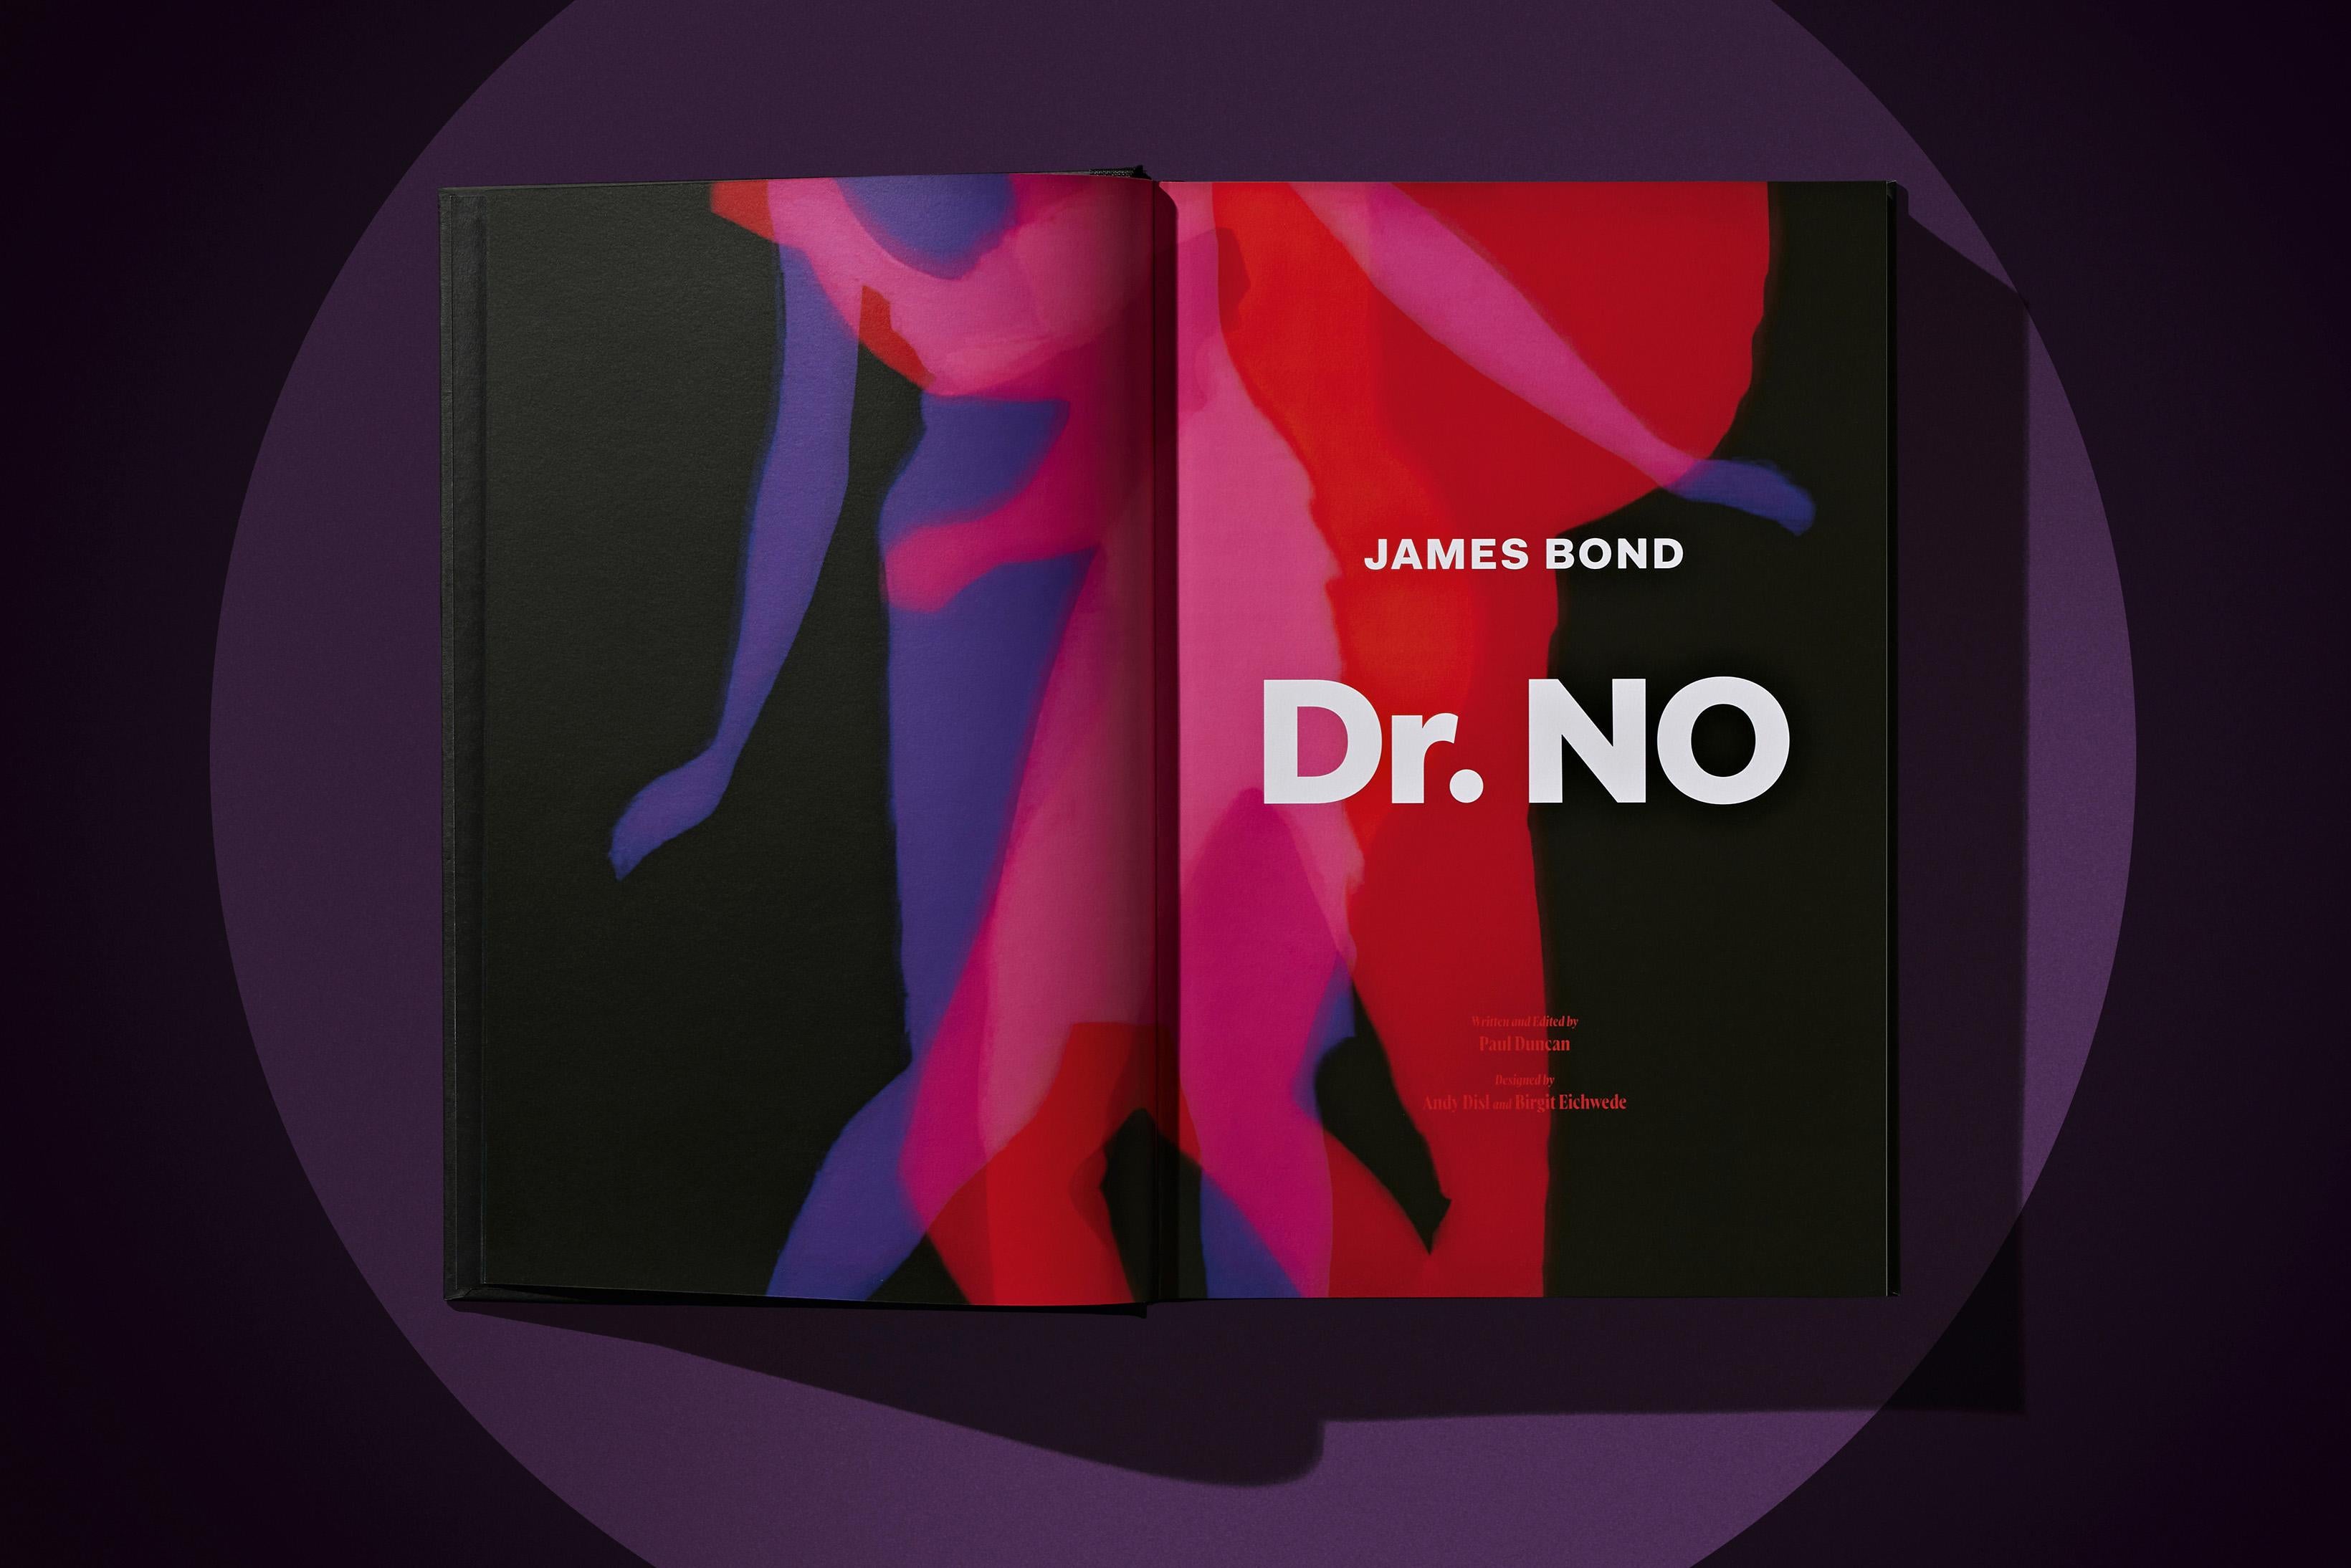 James Bond. Dr. No. ‘Bond, James Bond’, 1962. Limited Ed ChromaLuxe Print & Book For Sale 1